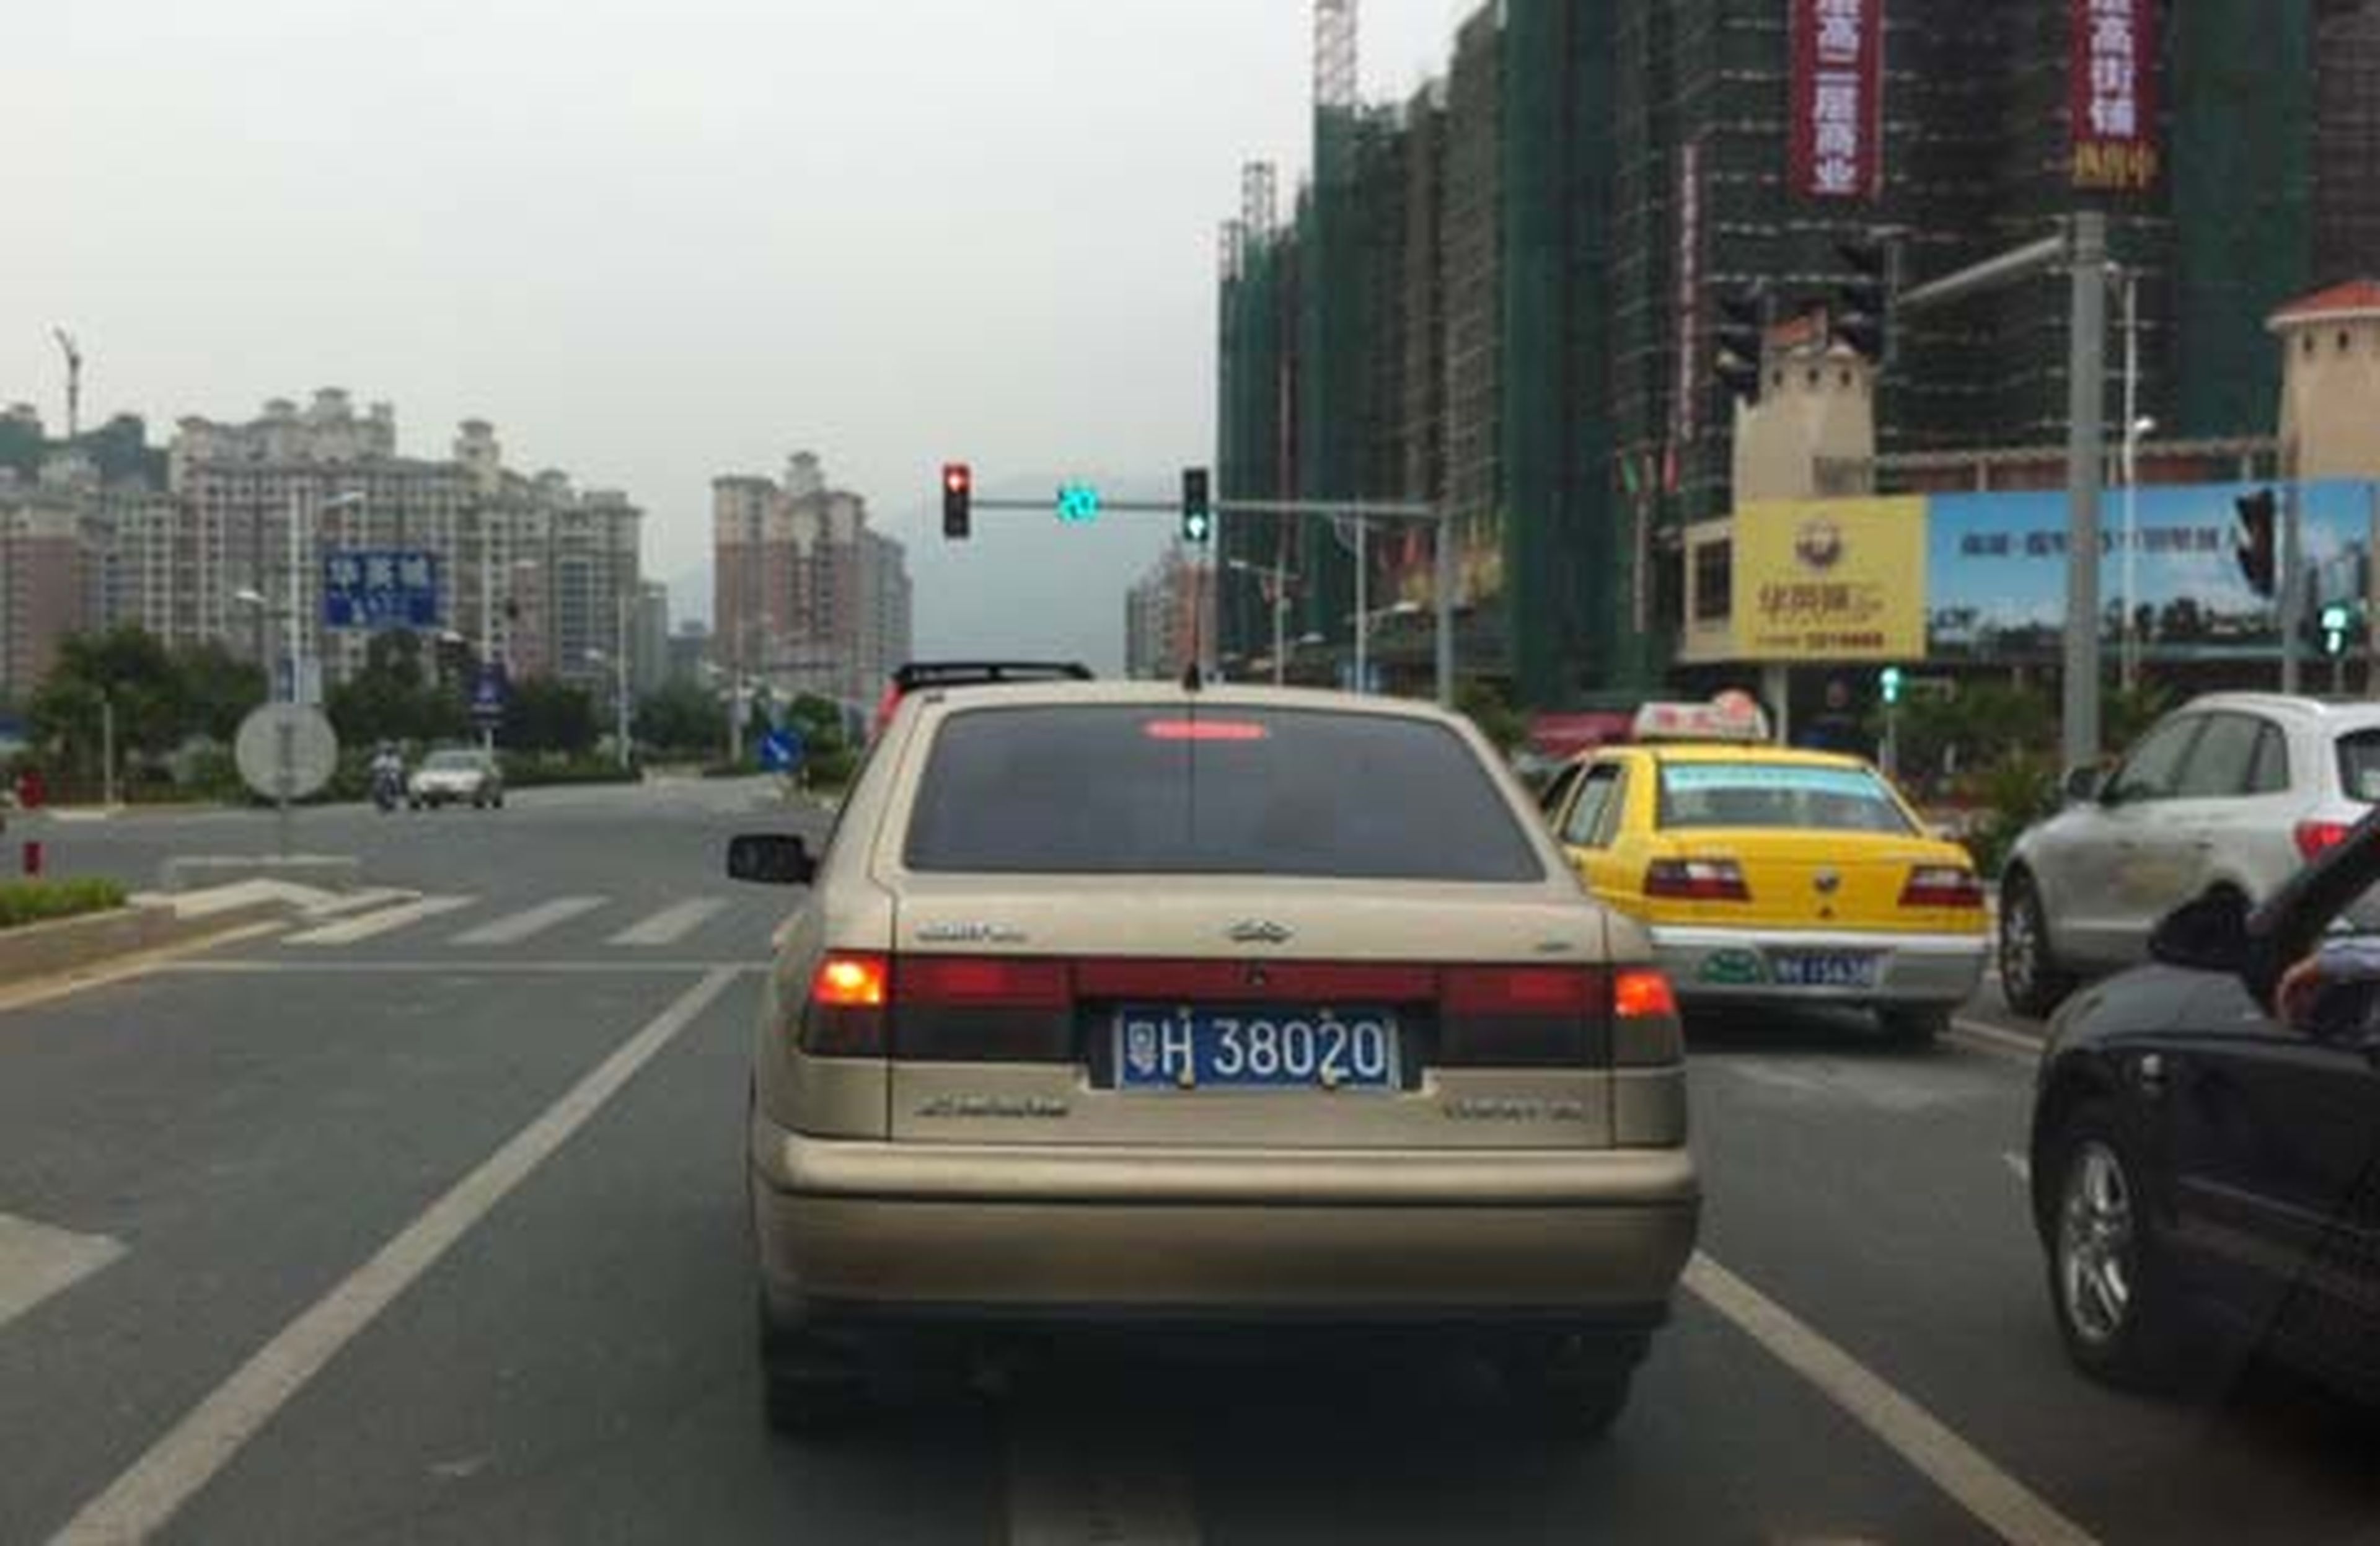 AUTO BILD en China con el Audi Q3